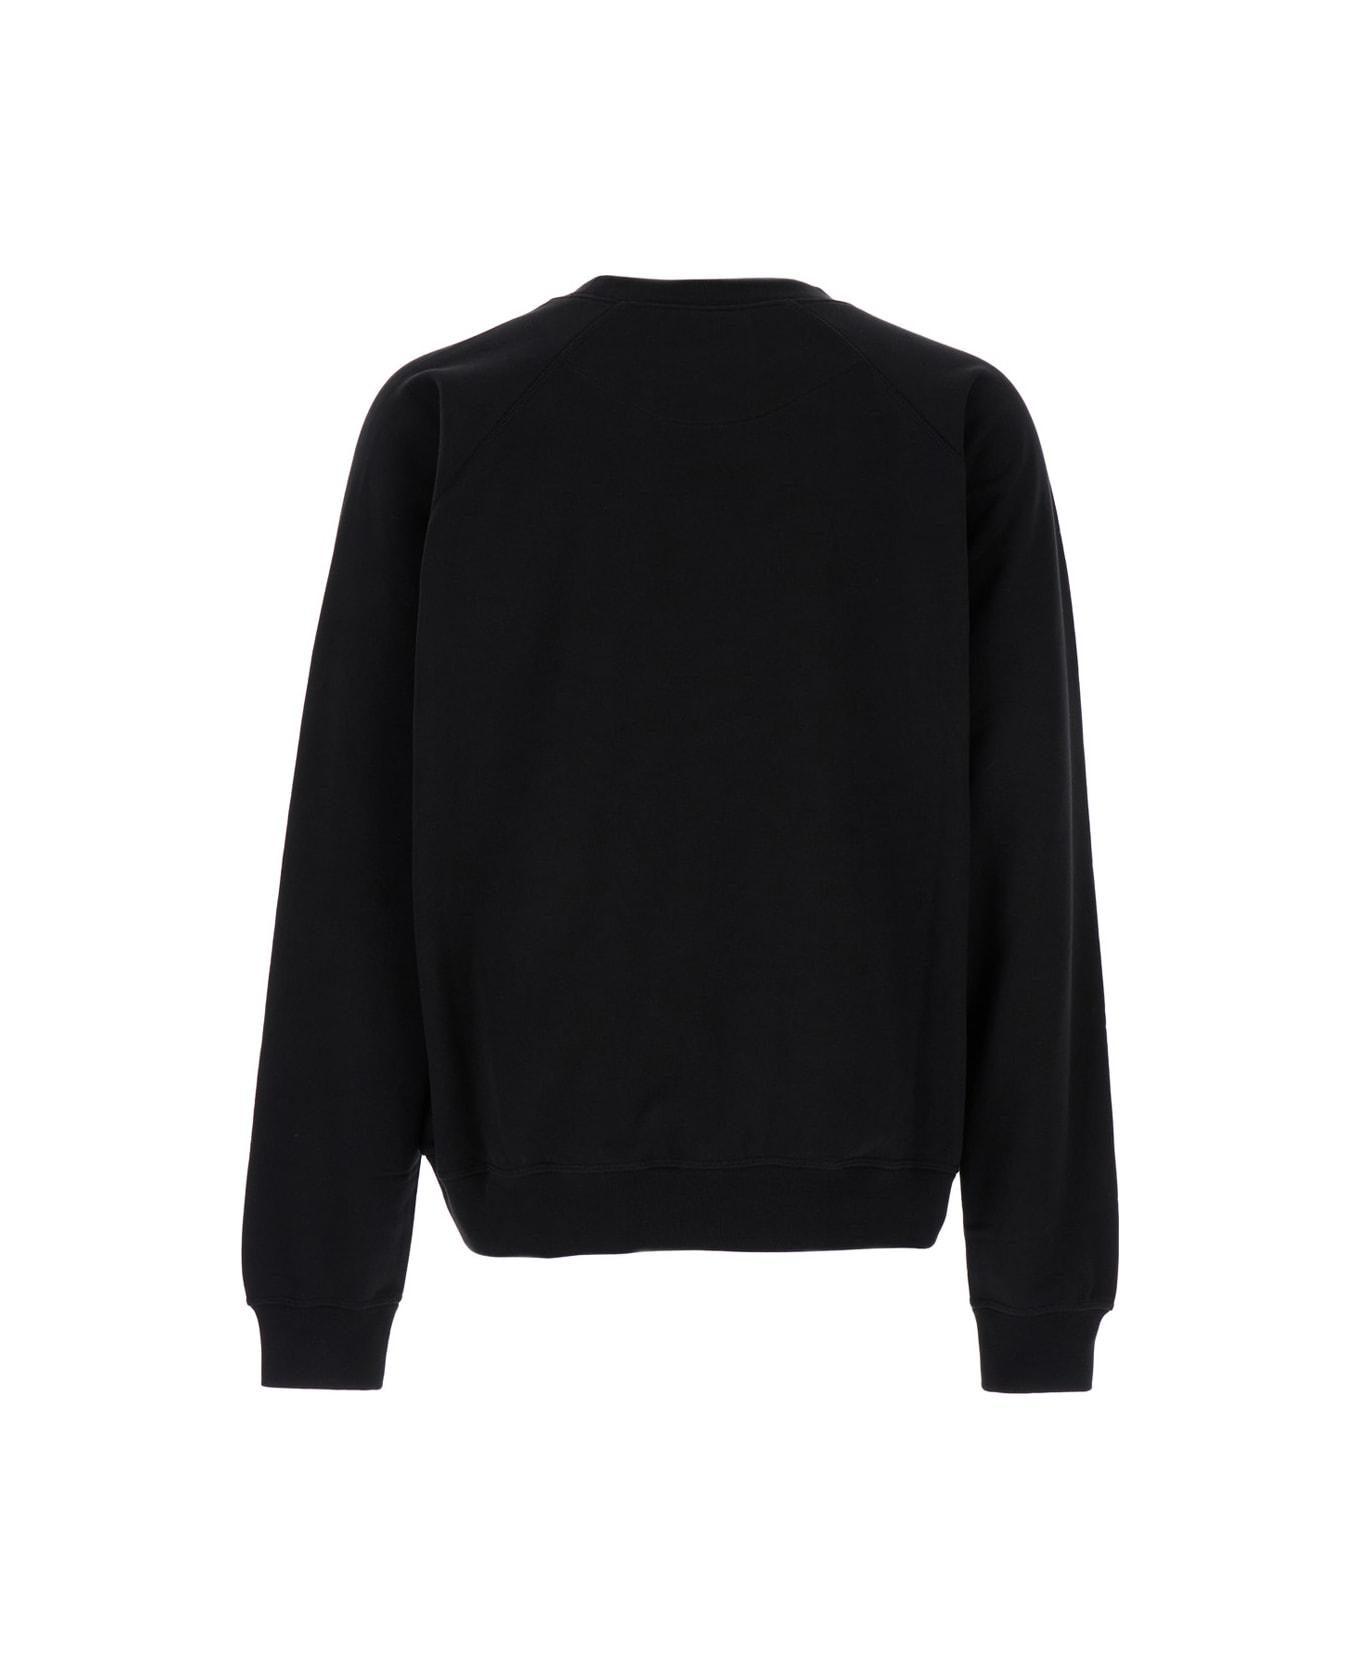 Vivienne Westwood Black Crewneck Sweatshirt With Orb Print In Cotton Man - Black